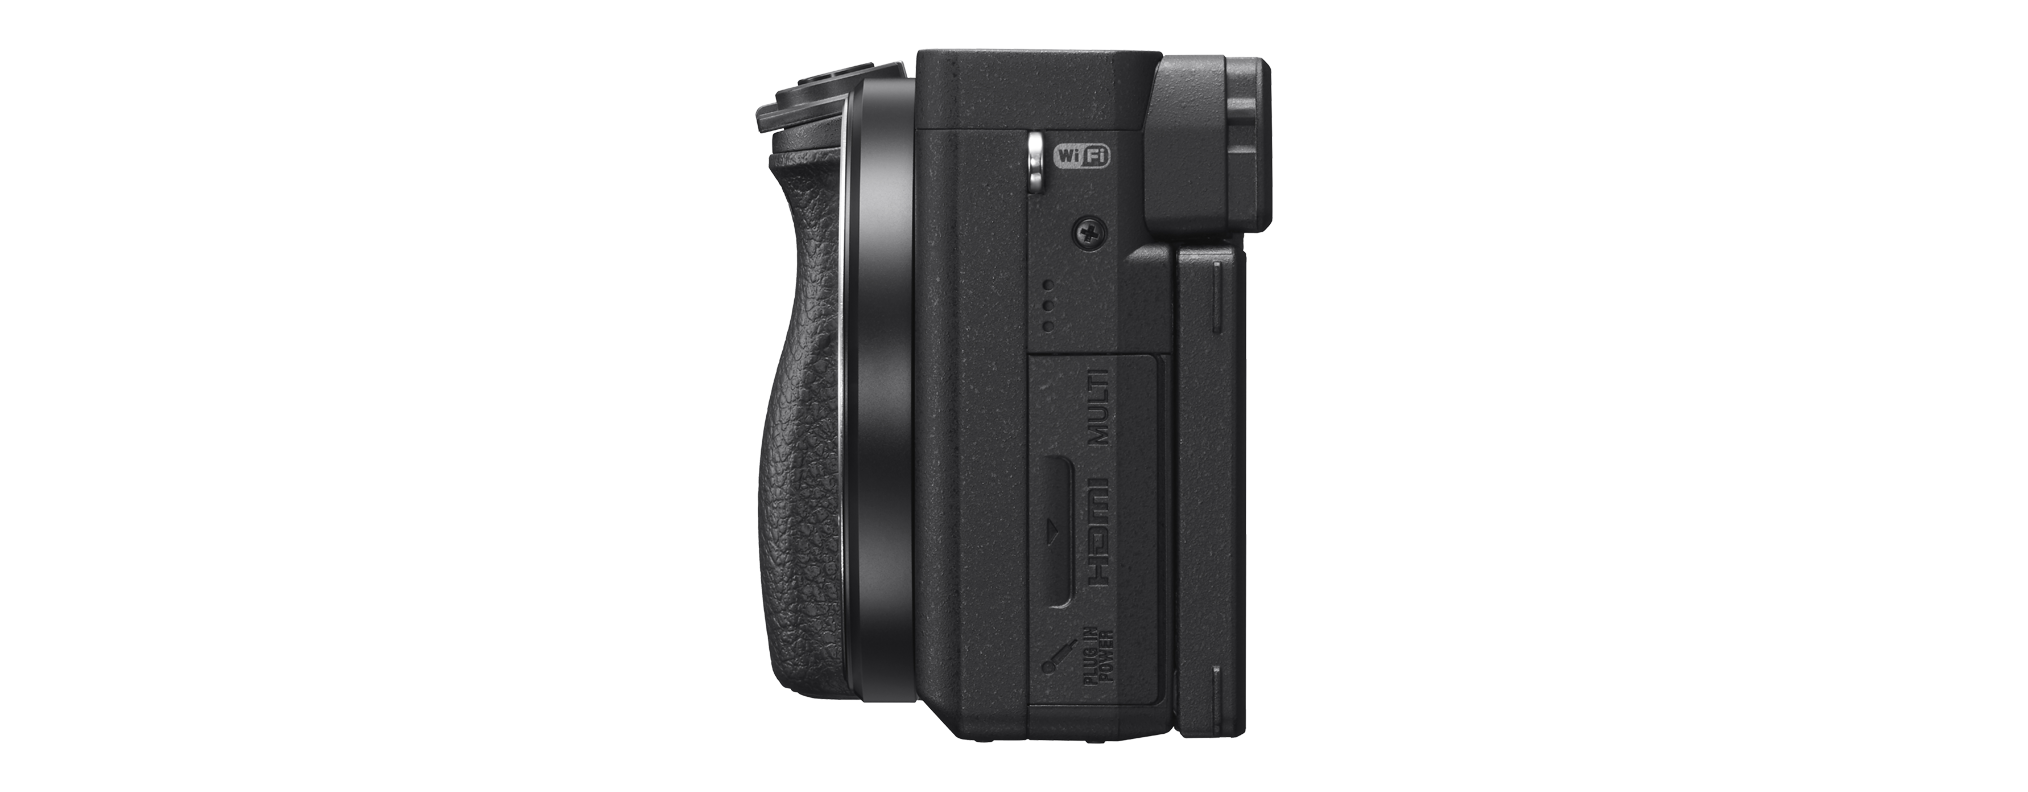 mit 6400 Touchscreen, Kit 18-135 7,6 cm (ILCE-6400M) WLAN Objektiv SONY Alpha mm, Systemkamera Display